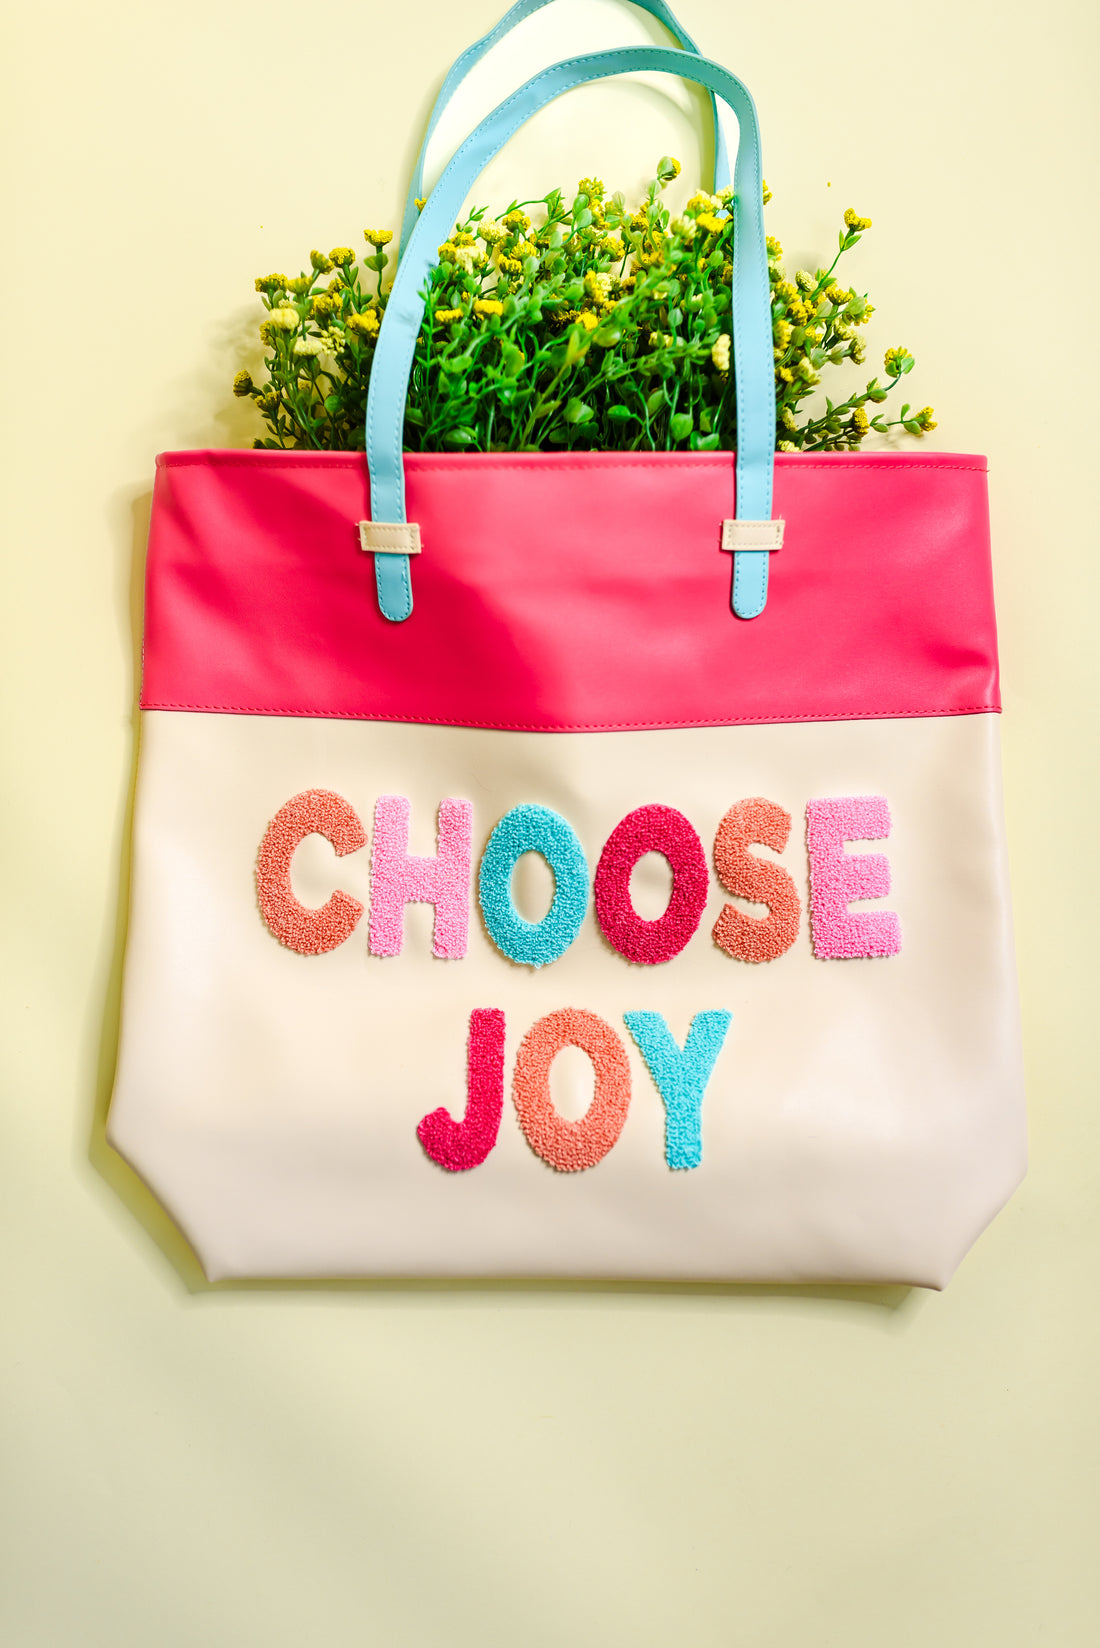 Choose Joy Tote